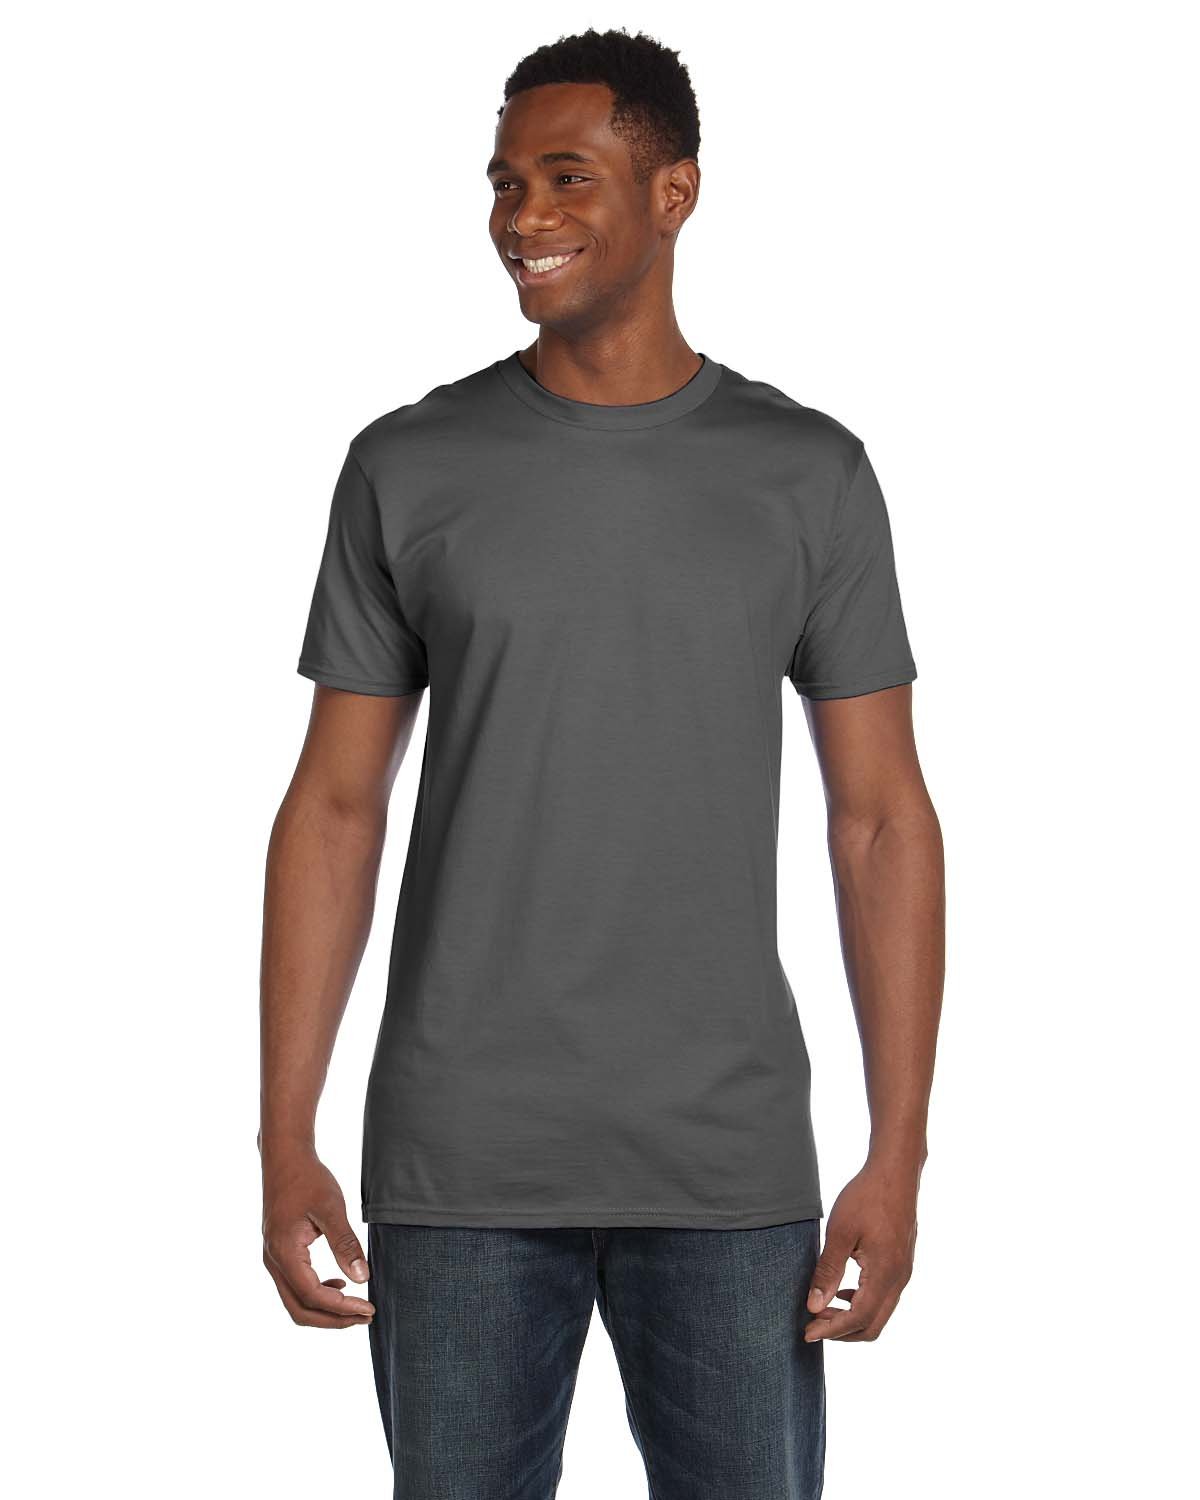 Hanes Men's Nano Premium Cotton T-Shirt (Pack of 2), Smoke Gray, X-Large